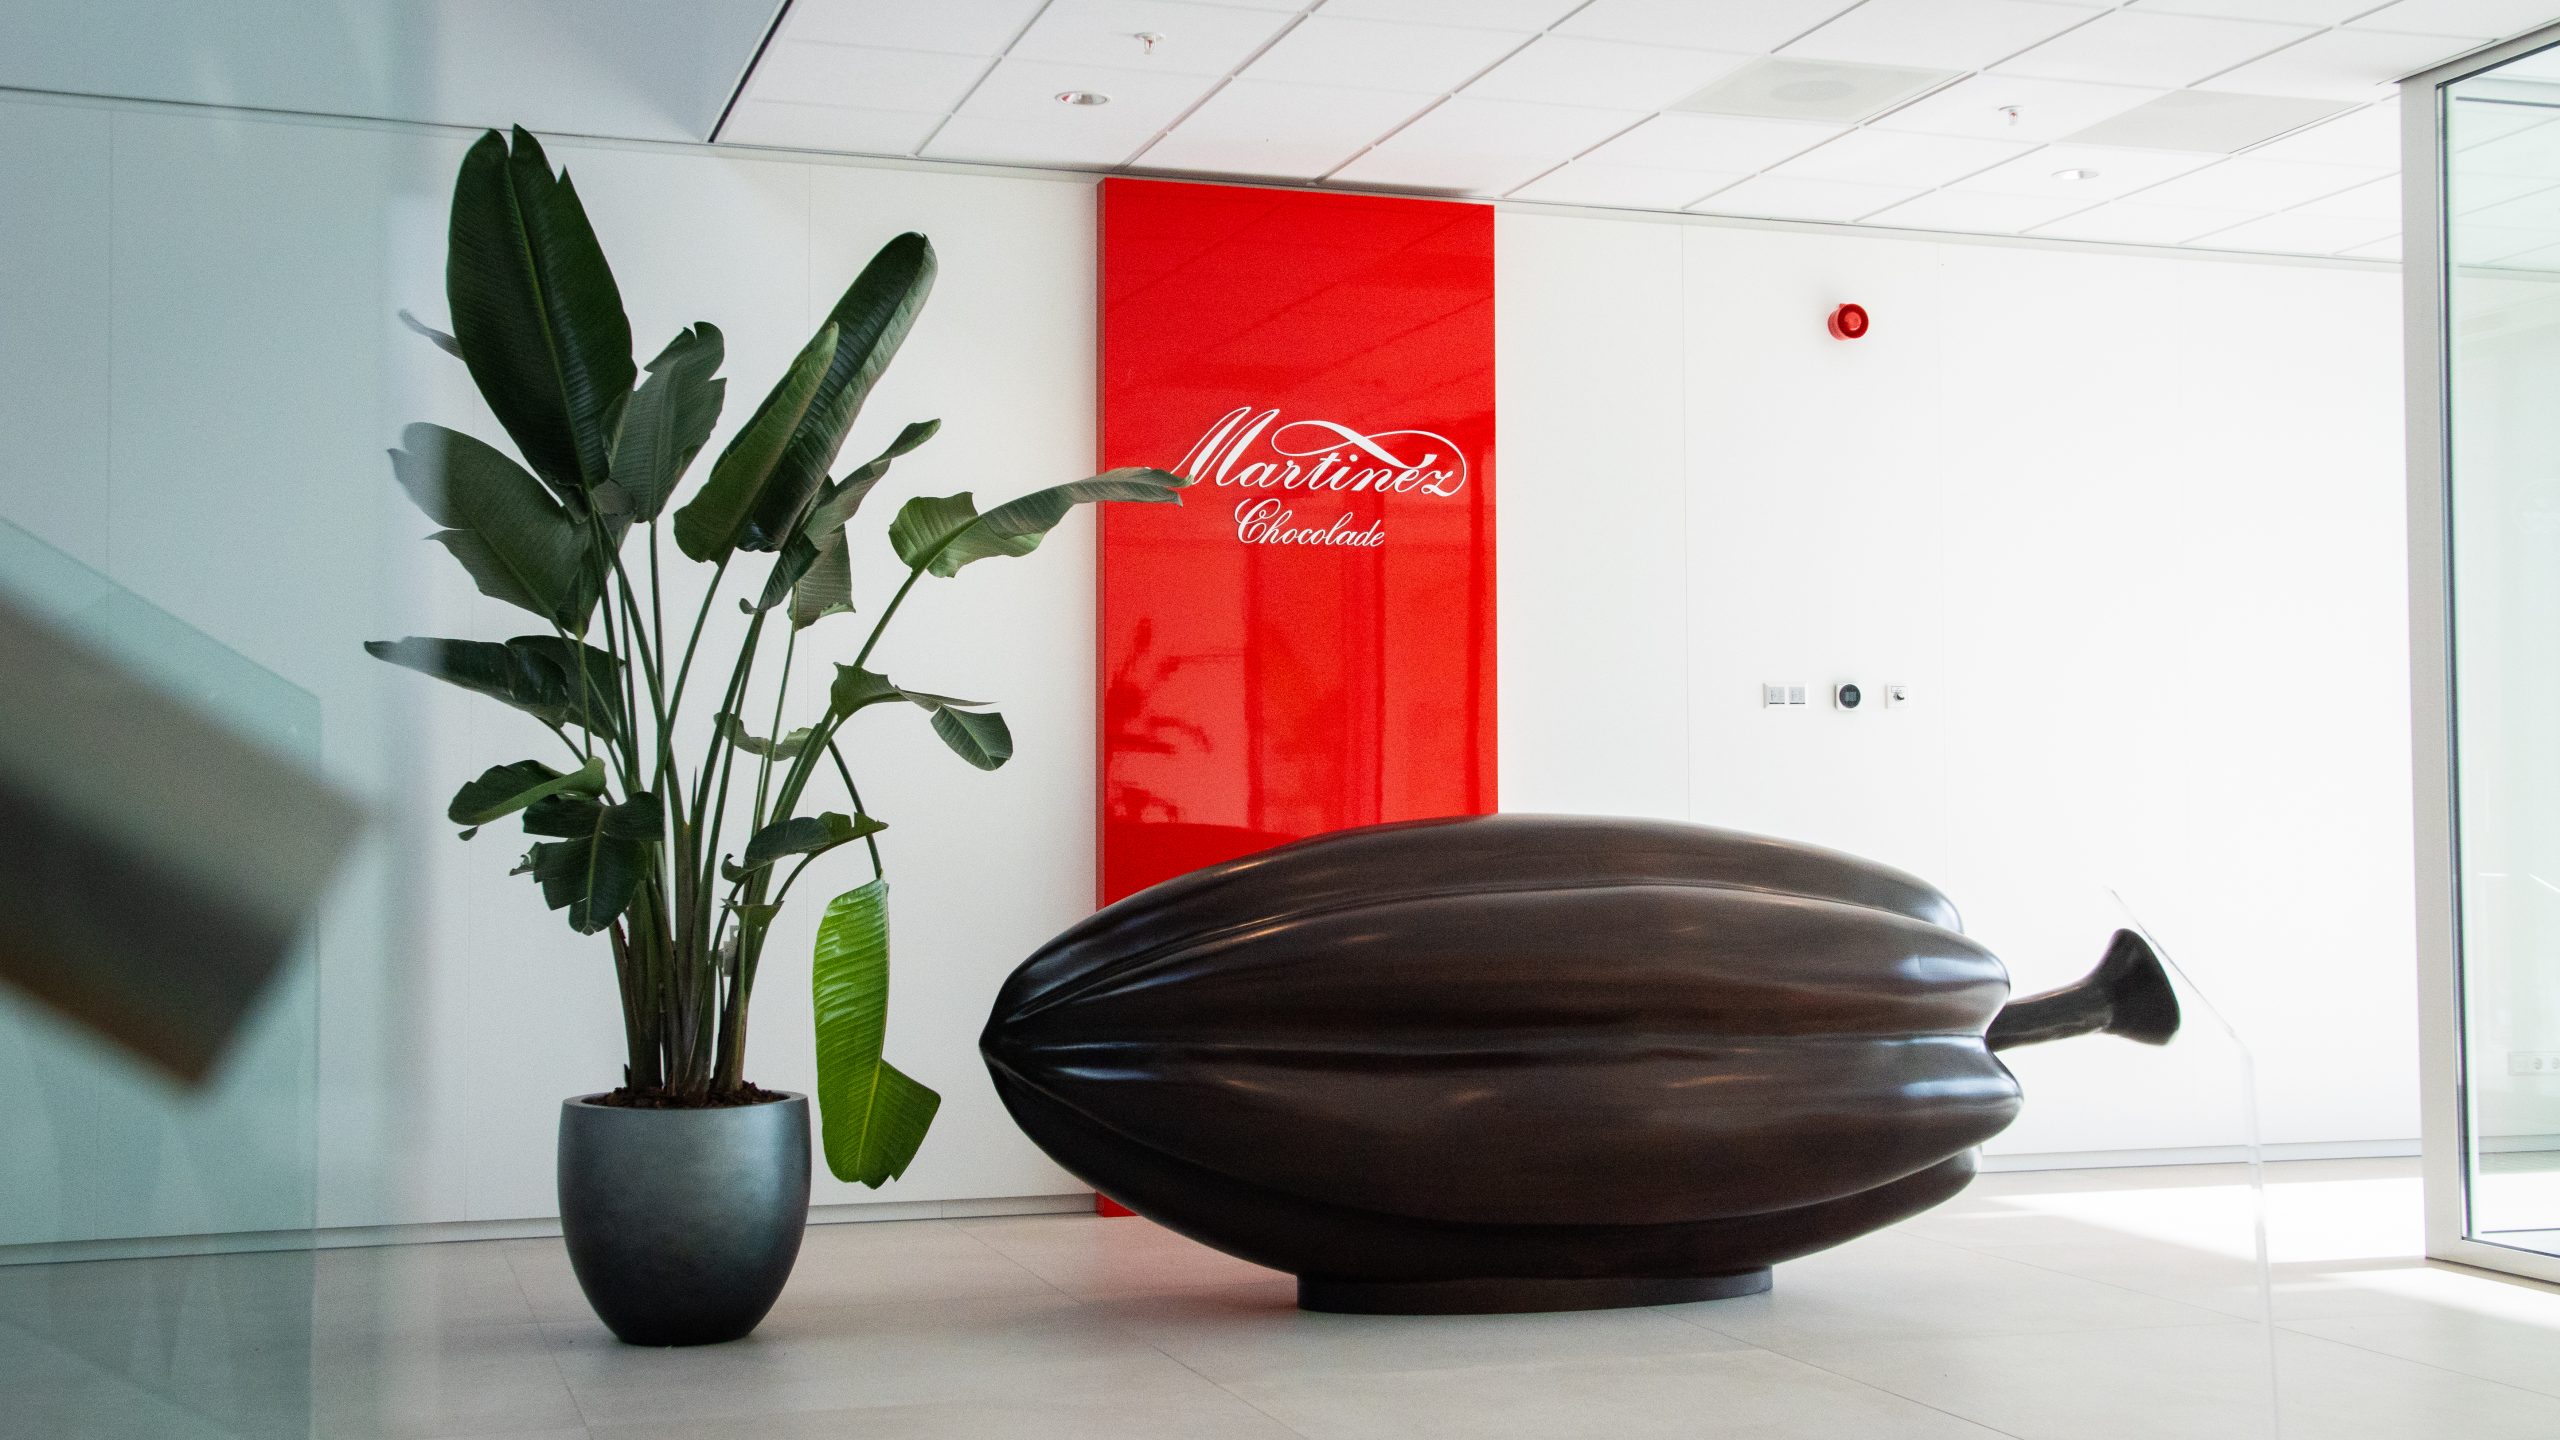 Maars liefert Martinez Chocolade komplette Büroeinrichtung